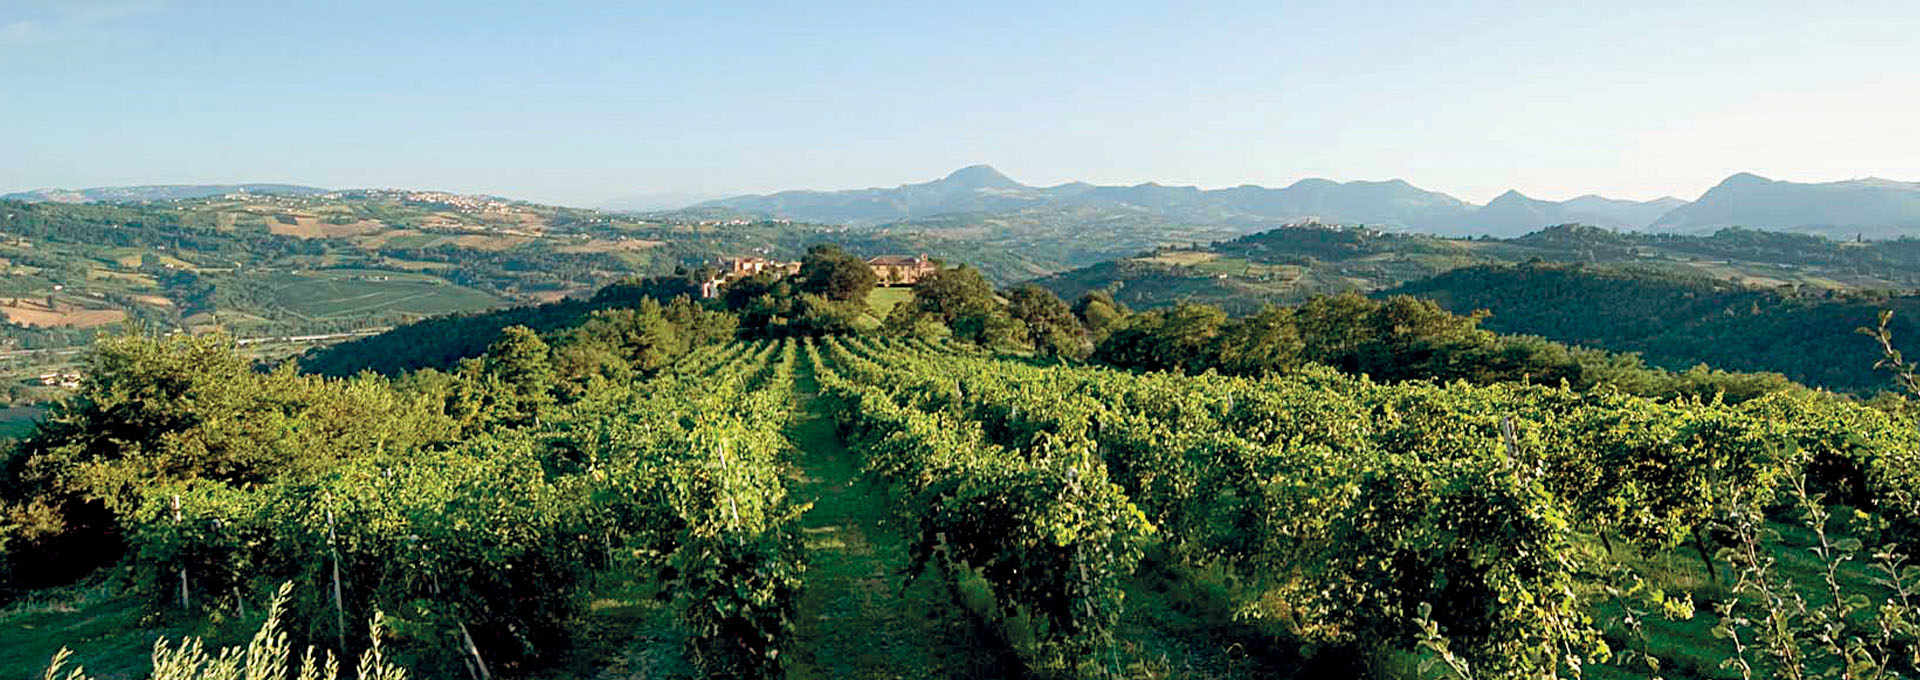 The World-Renowned Verdicchio Wine